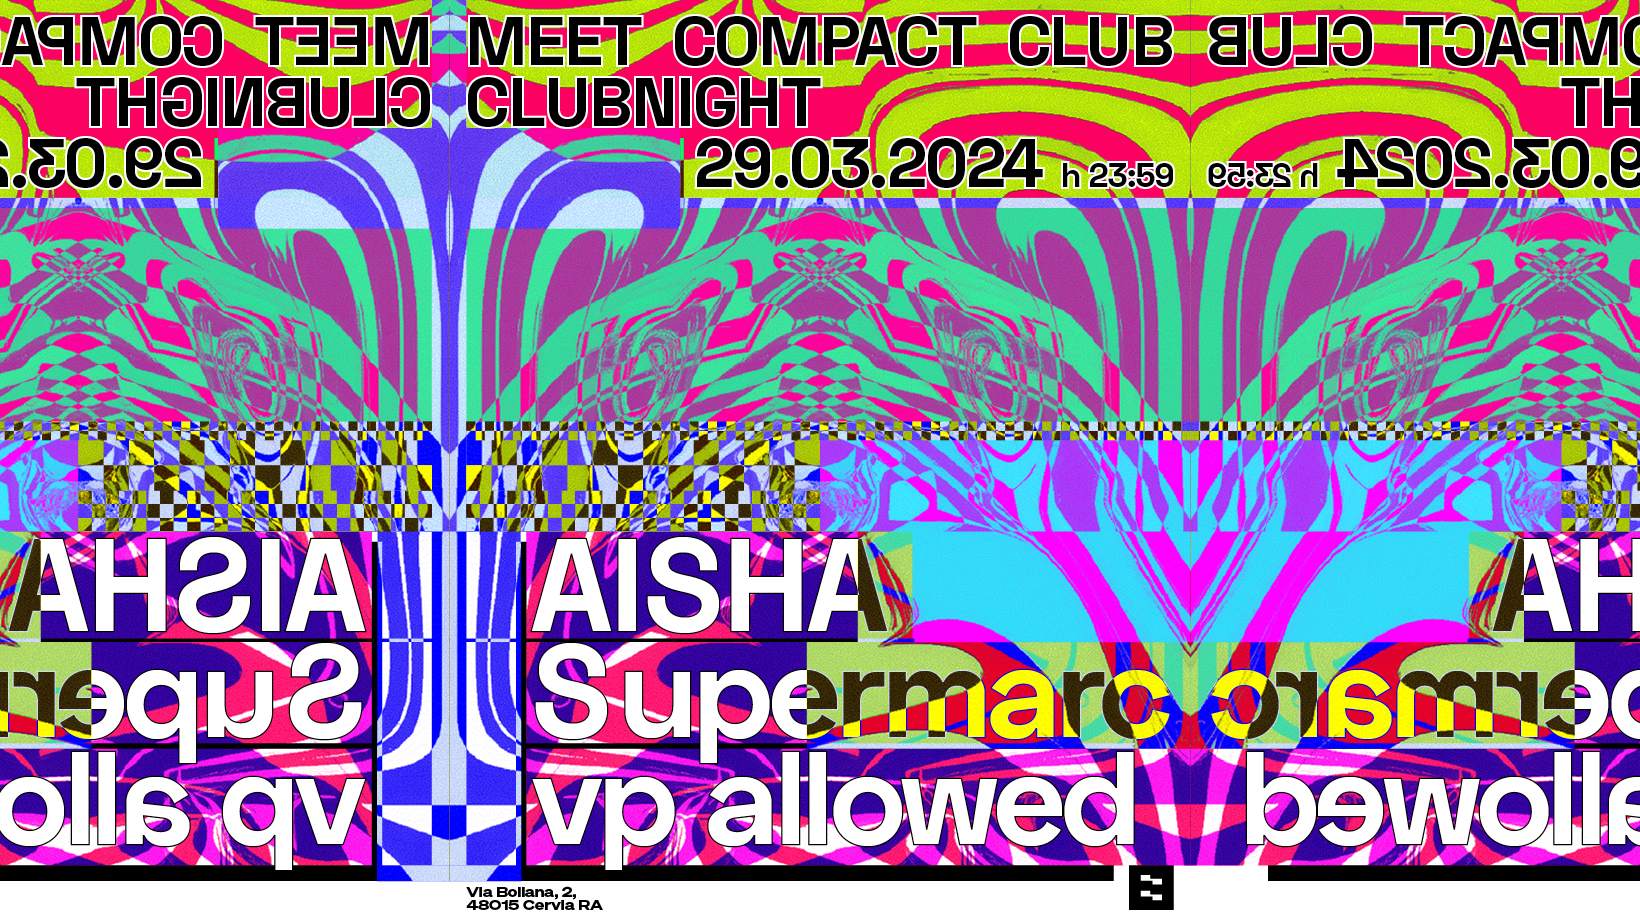 Meet Compact Club with AISHA - フライヤー表